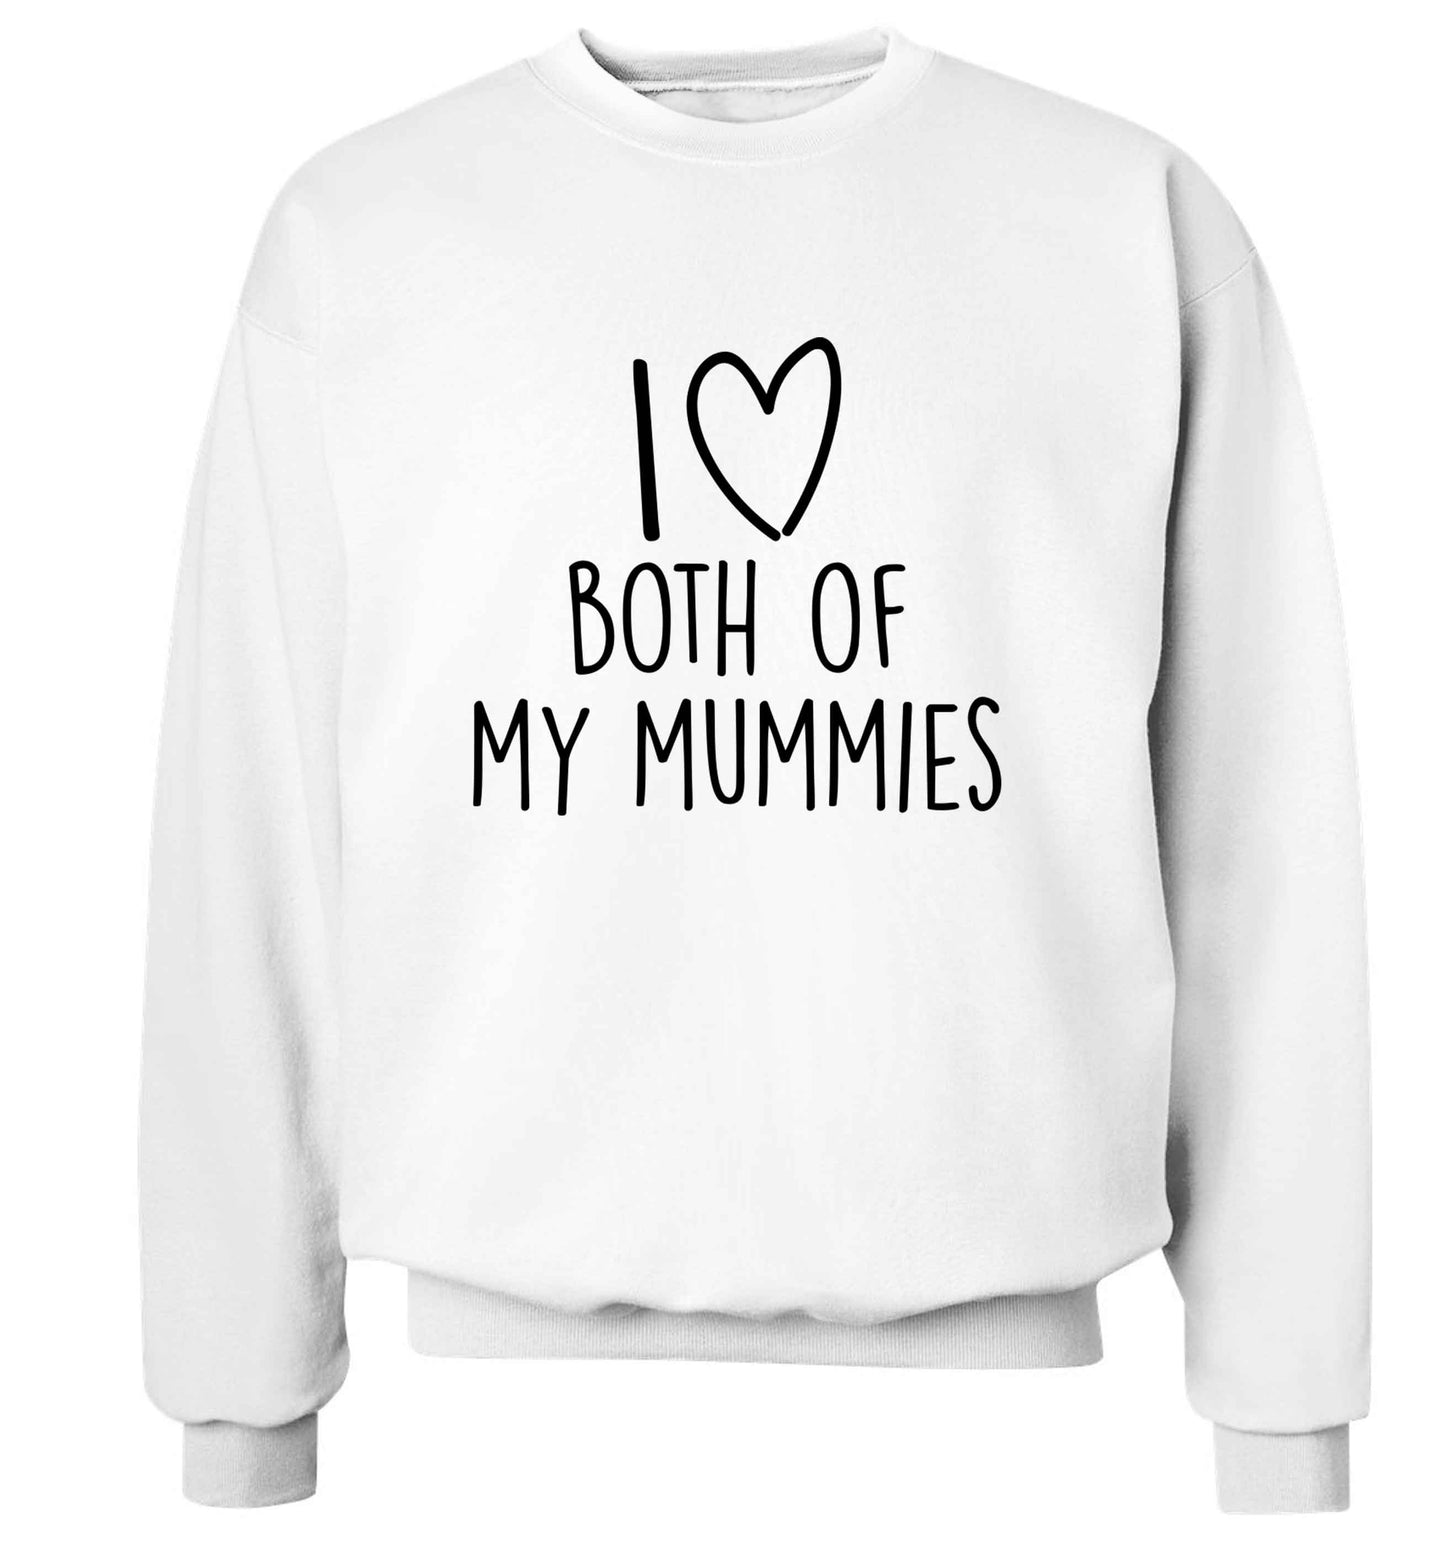 I love both of my mummies adult's unisex white sweater 2XL